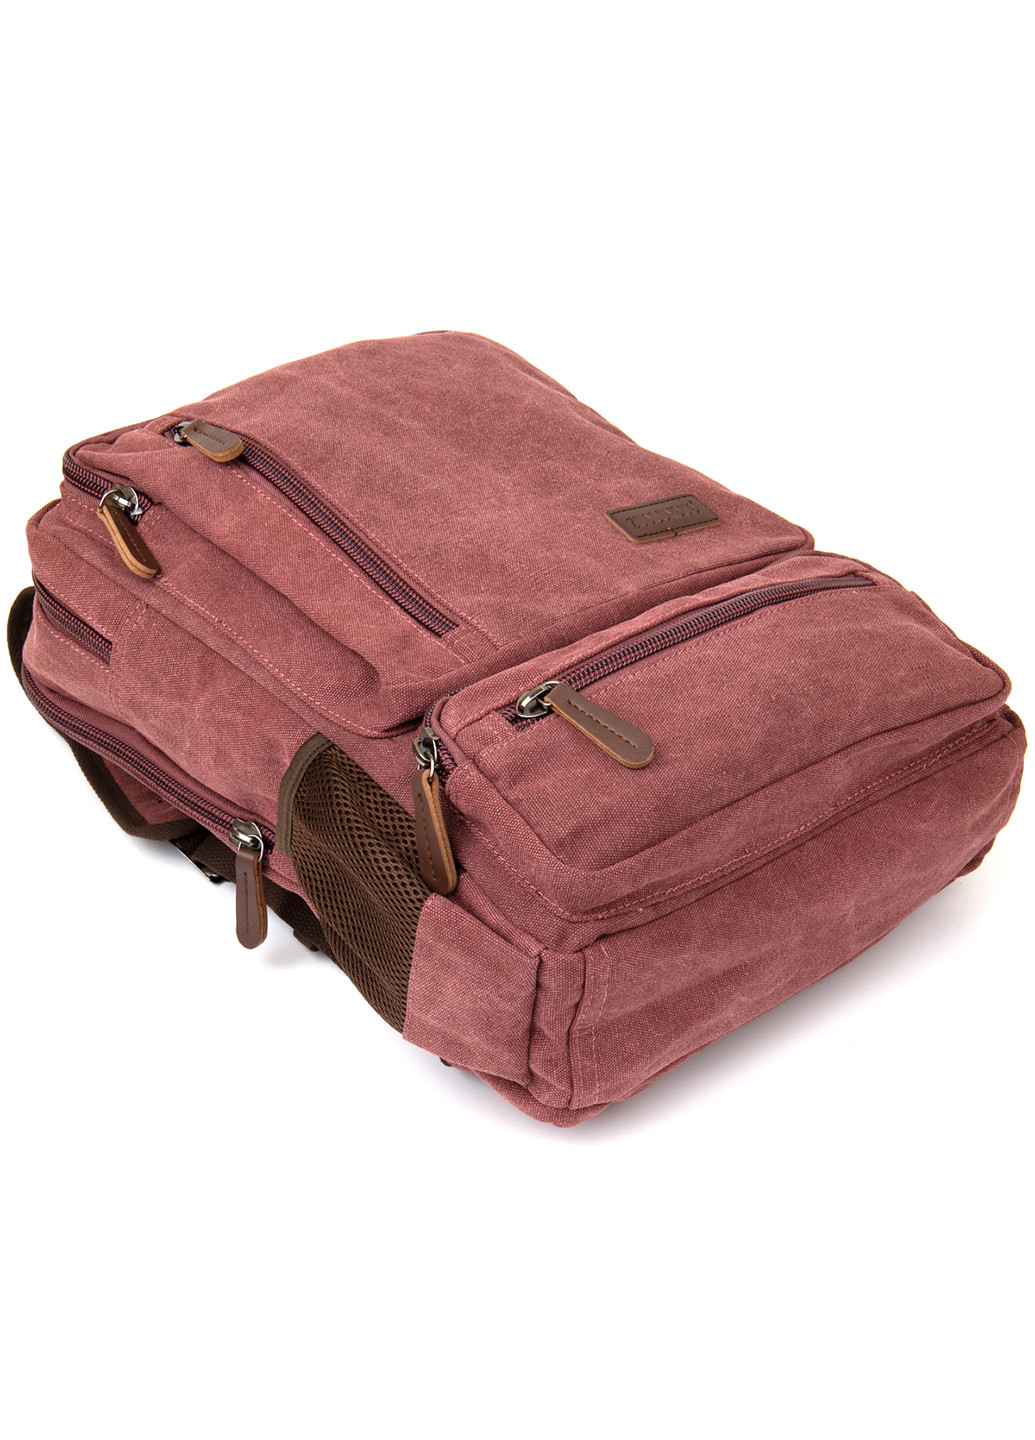 Текстильный рюкзак 32х41х16 см Vintage (242188985)